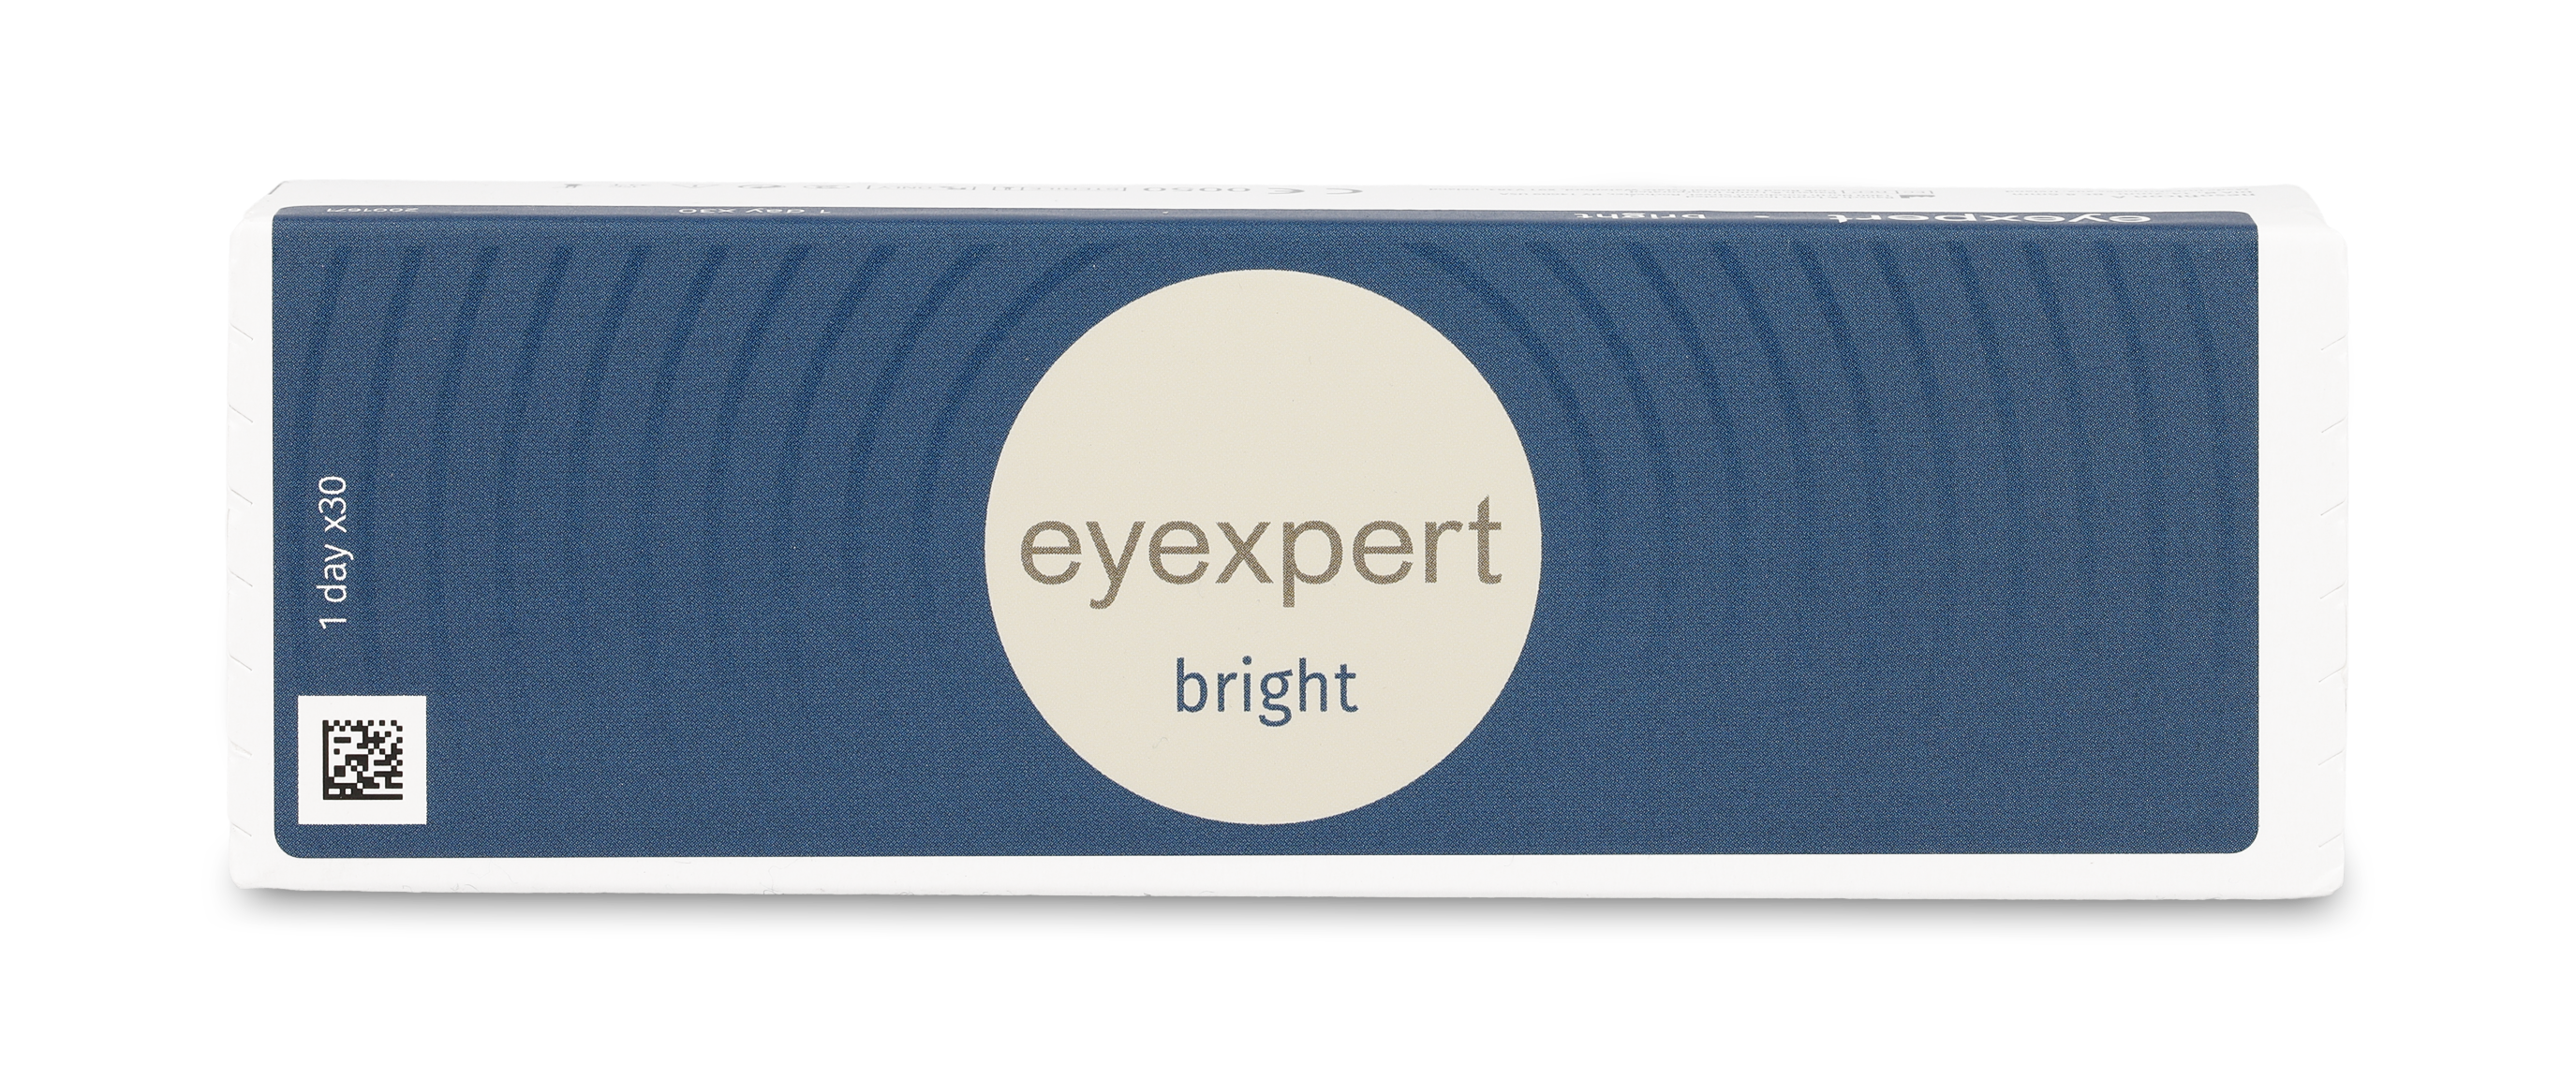 Eyexpert Bright